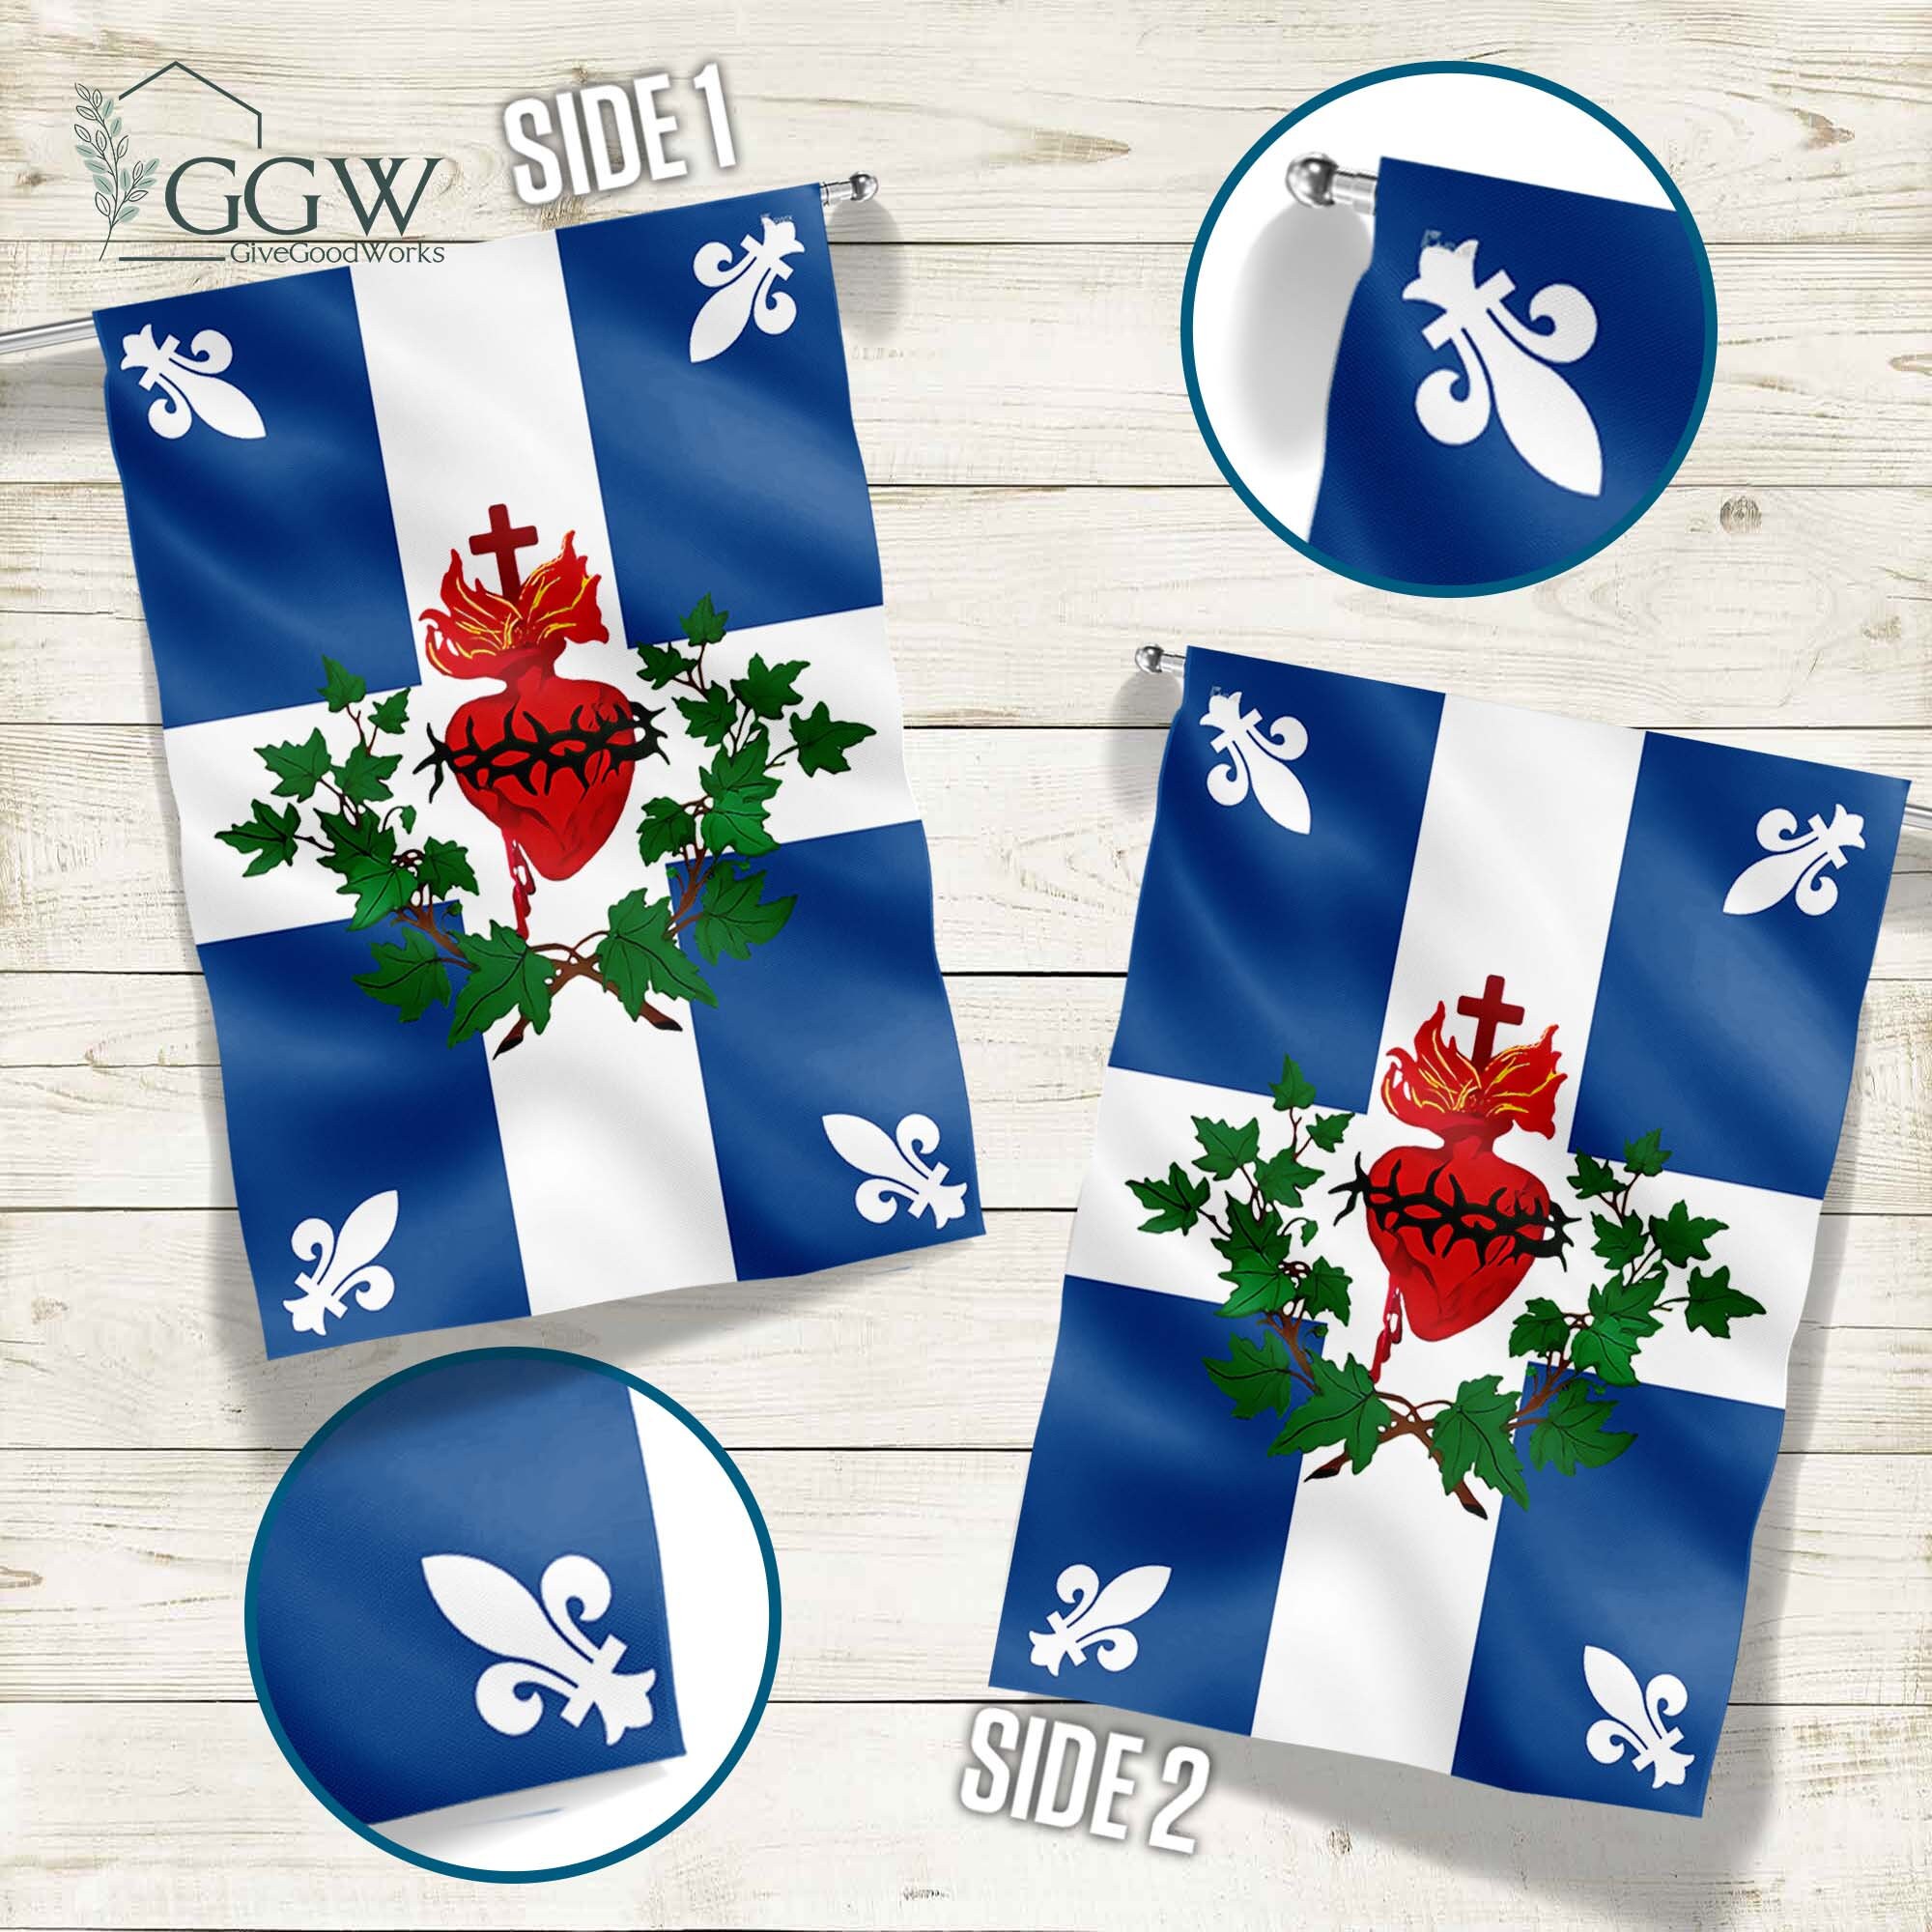 Discover Quebec Sacred Heart Flag, Carillon-Sacr-Coeur Flag, Flag of the Sacred Heart